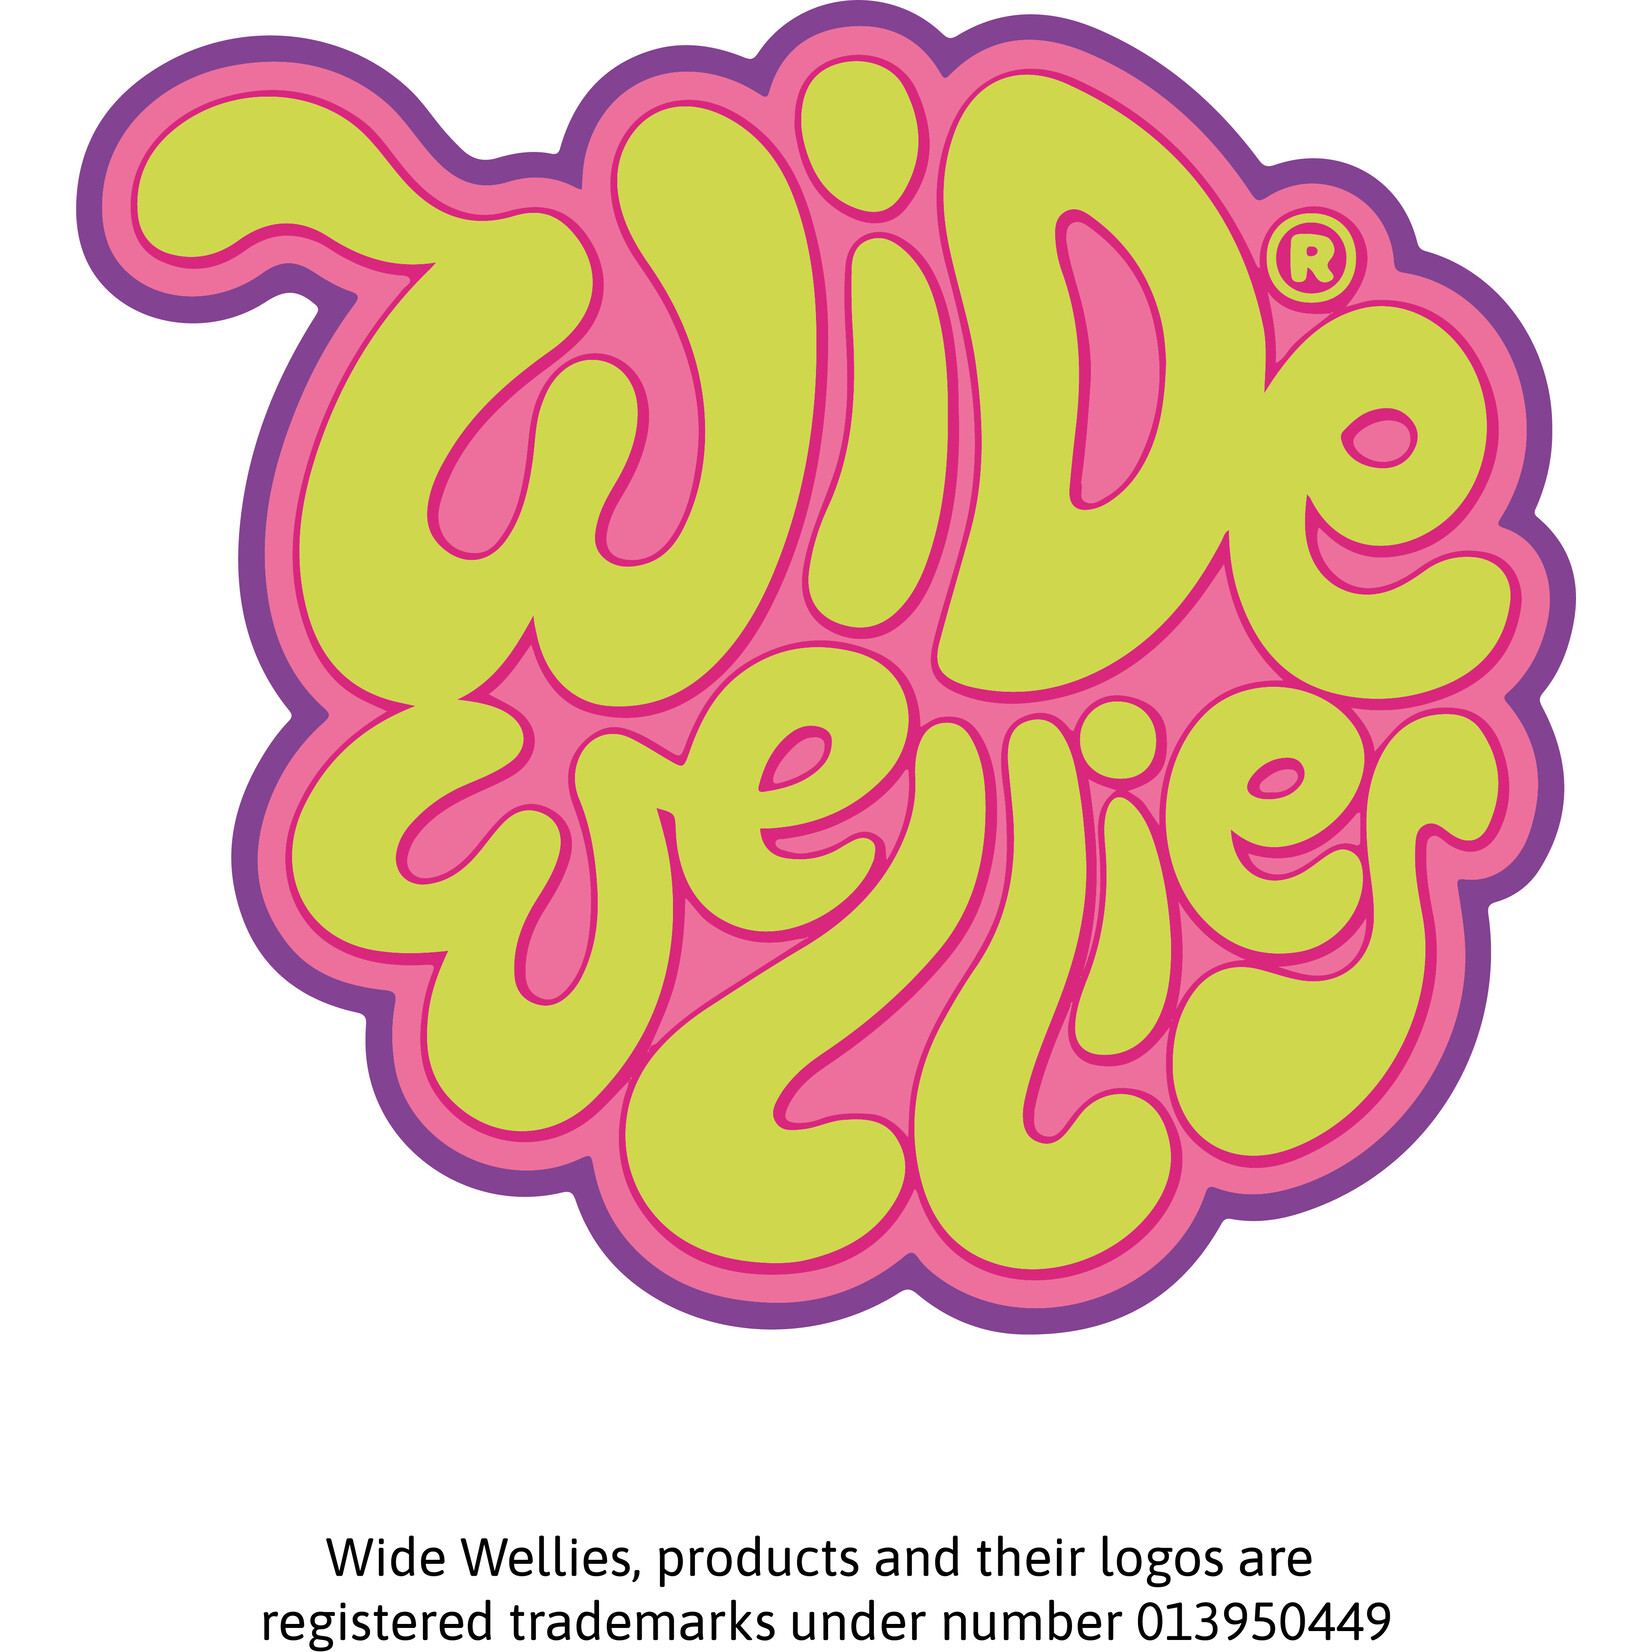 JJ Footwear Wellies - Black/Wit polka dots